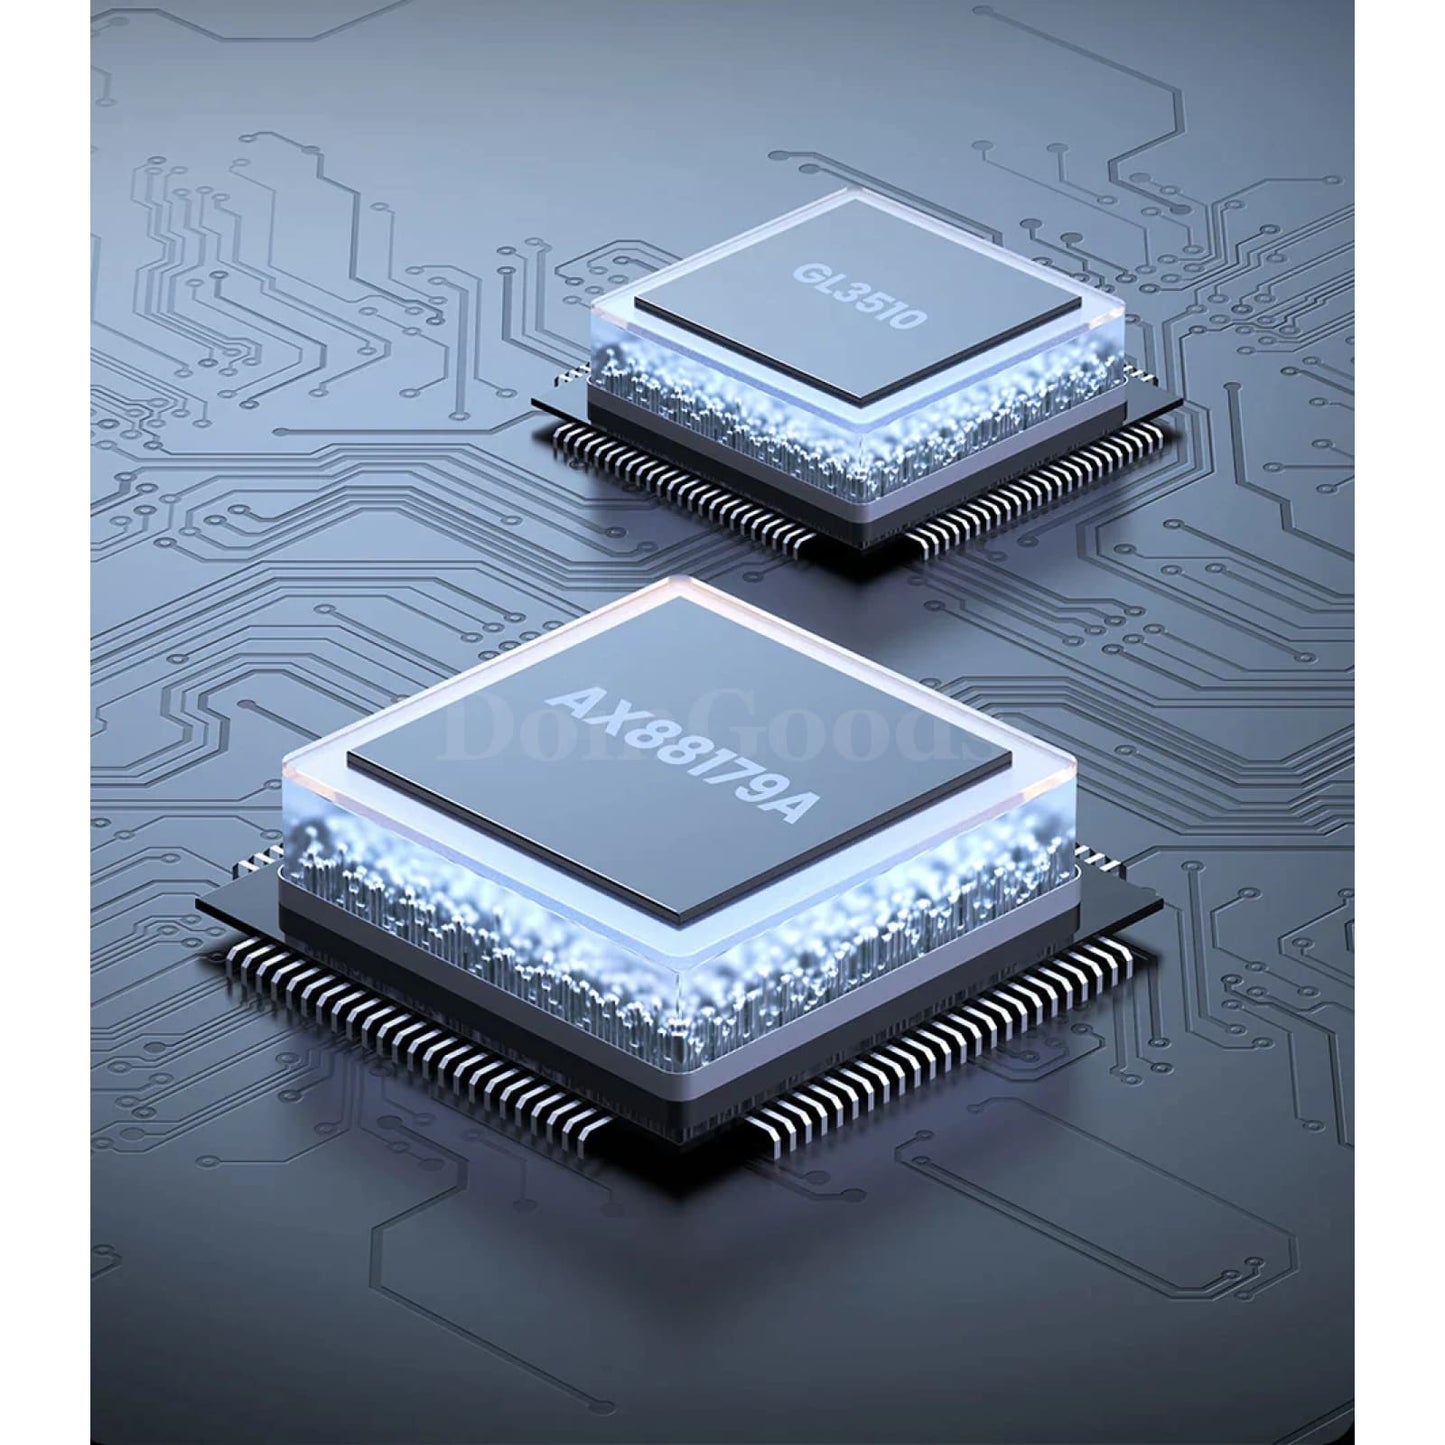 Ugreen Usb Ethernet Adapter 1000/100Mbps 3.0 Hub For Xiaomi Mi Box Macbook 301635